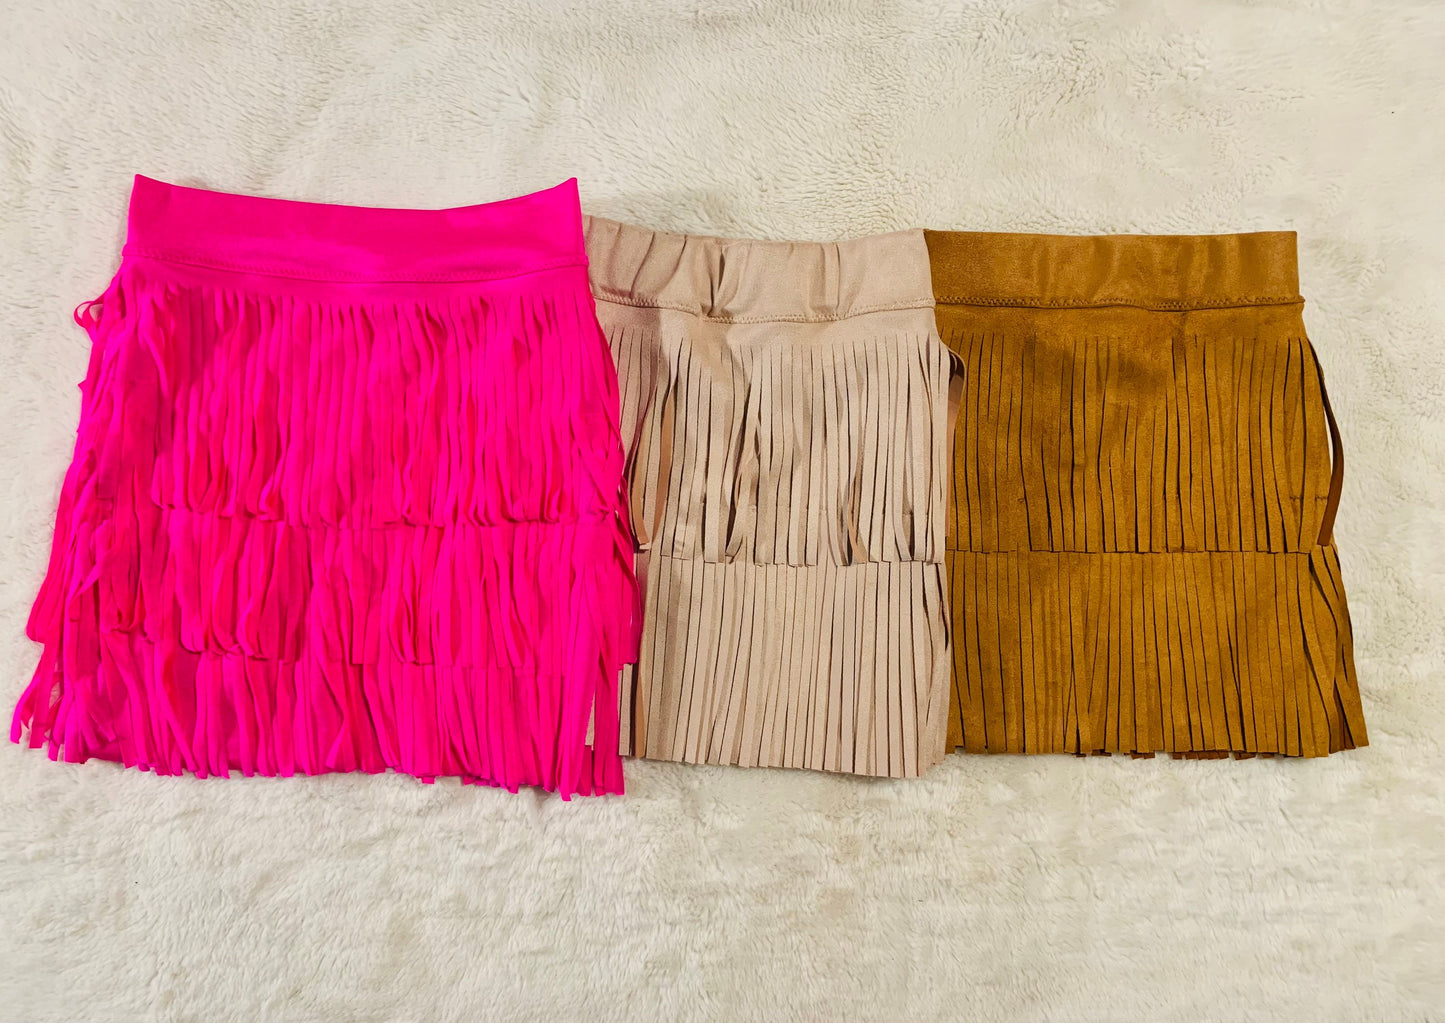 Fringe mini skirt|vegan leather, faux suede, lycra spandex|junior clothes|Girls skirts|Boho fringe skirts|Wholesome Goods